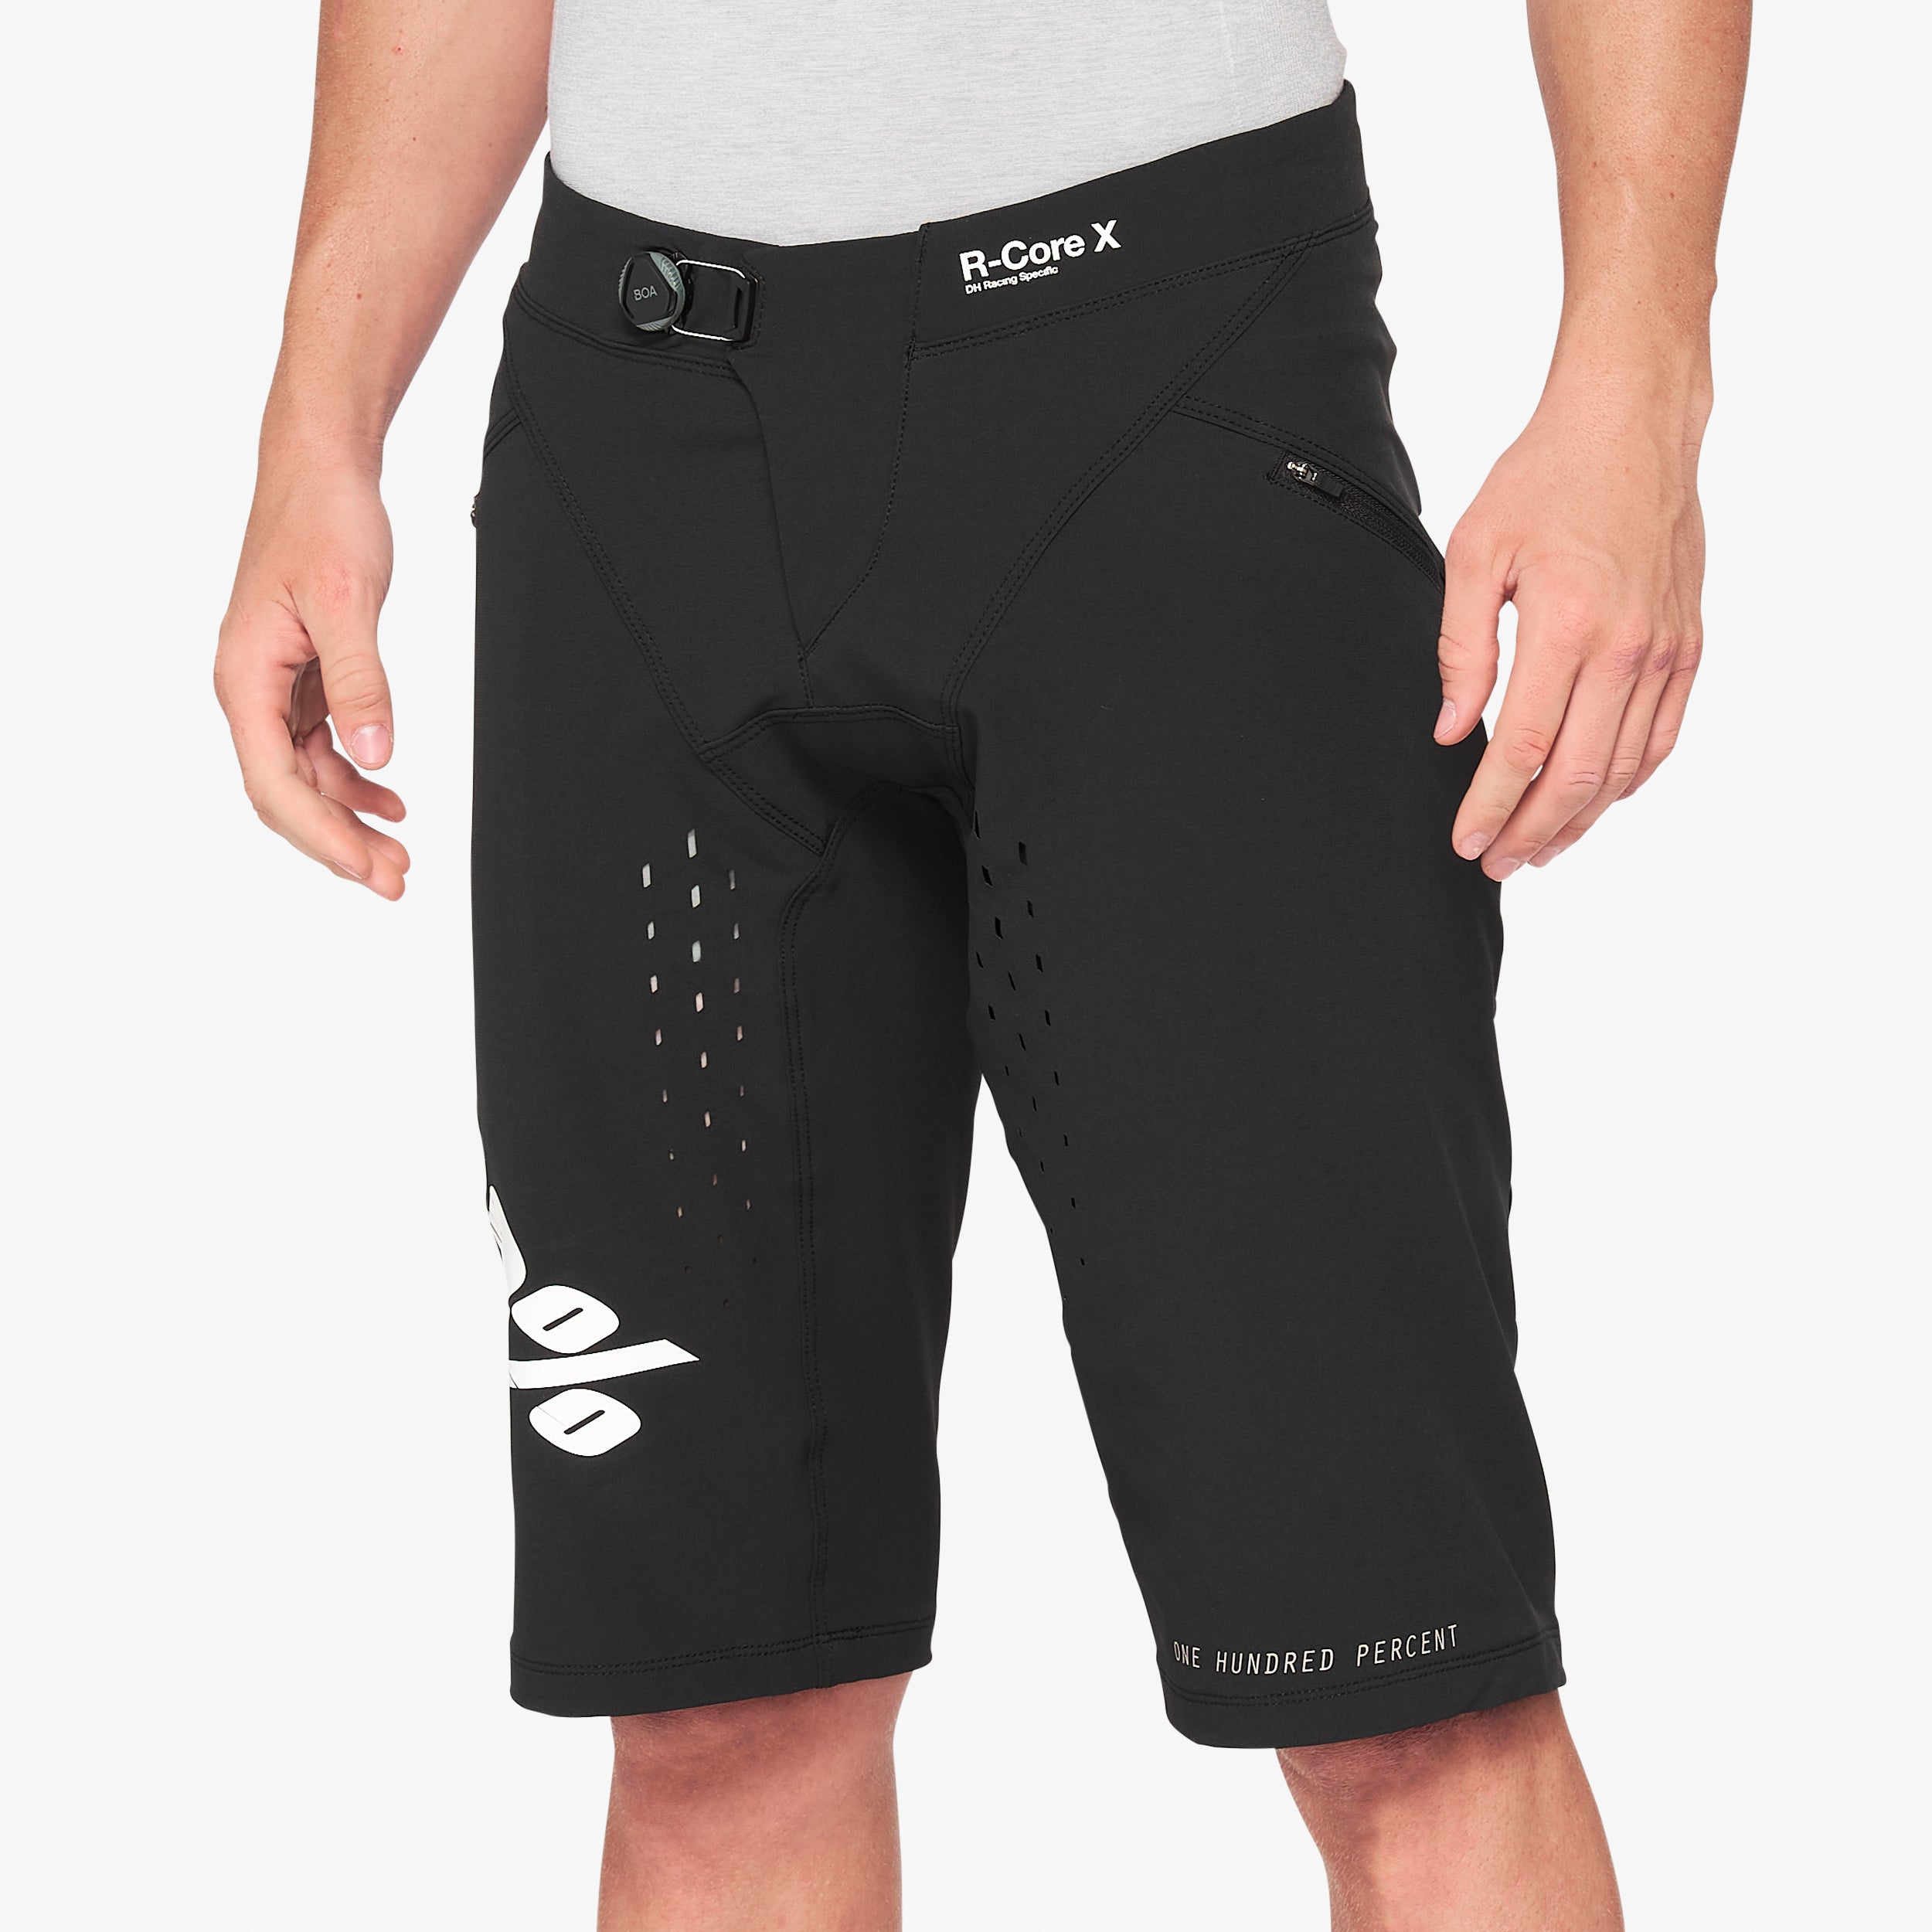 R-CORE X Shorts Black